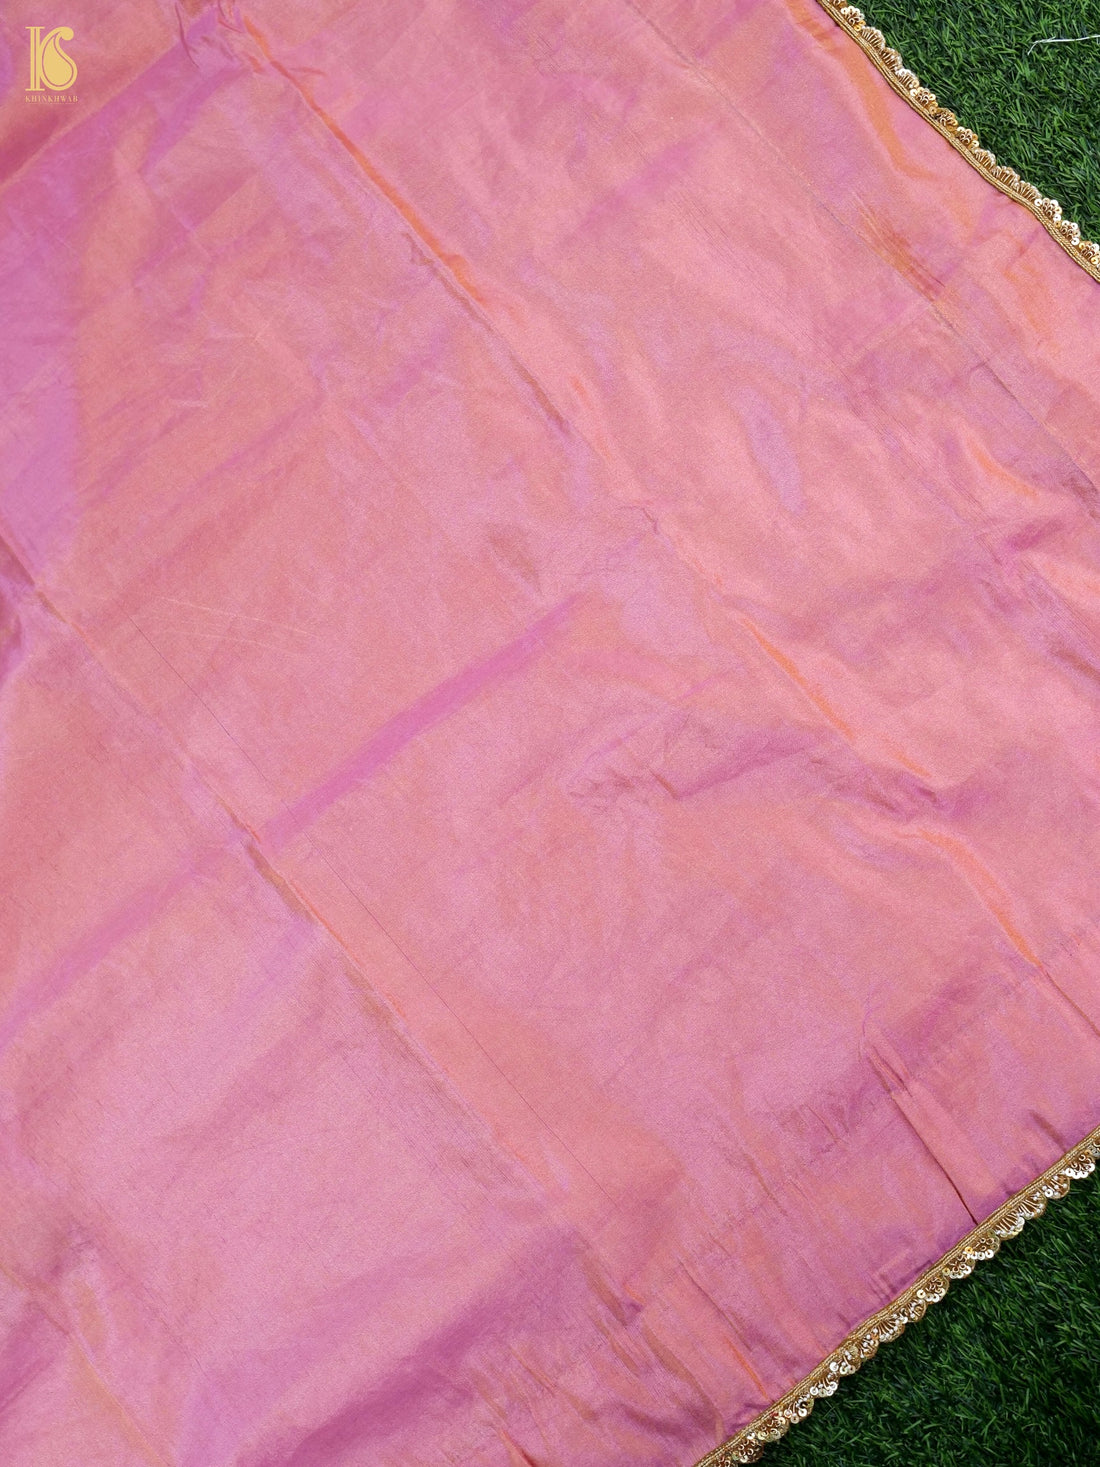 Handwoven Banarasi Plain Tissue Saree with Border